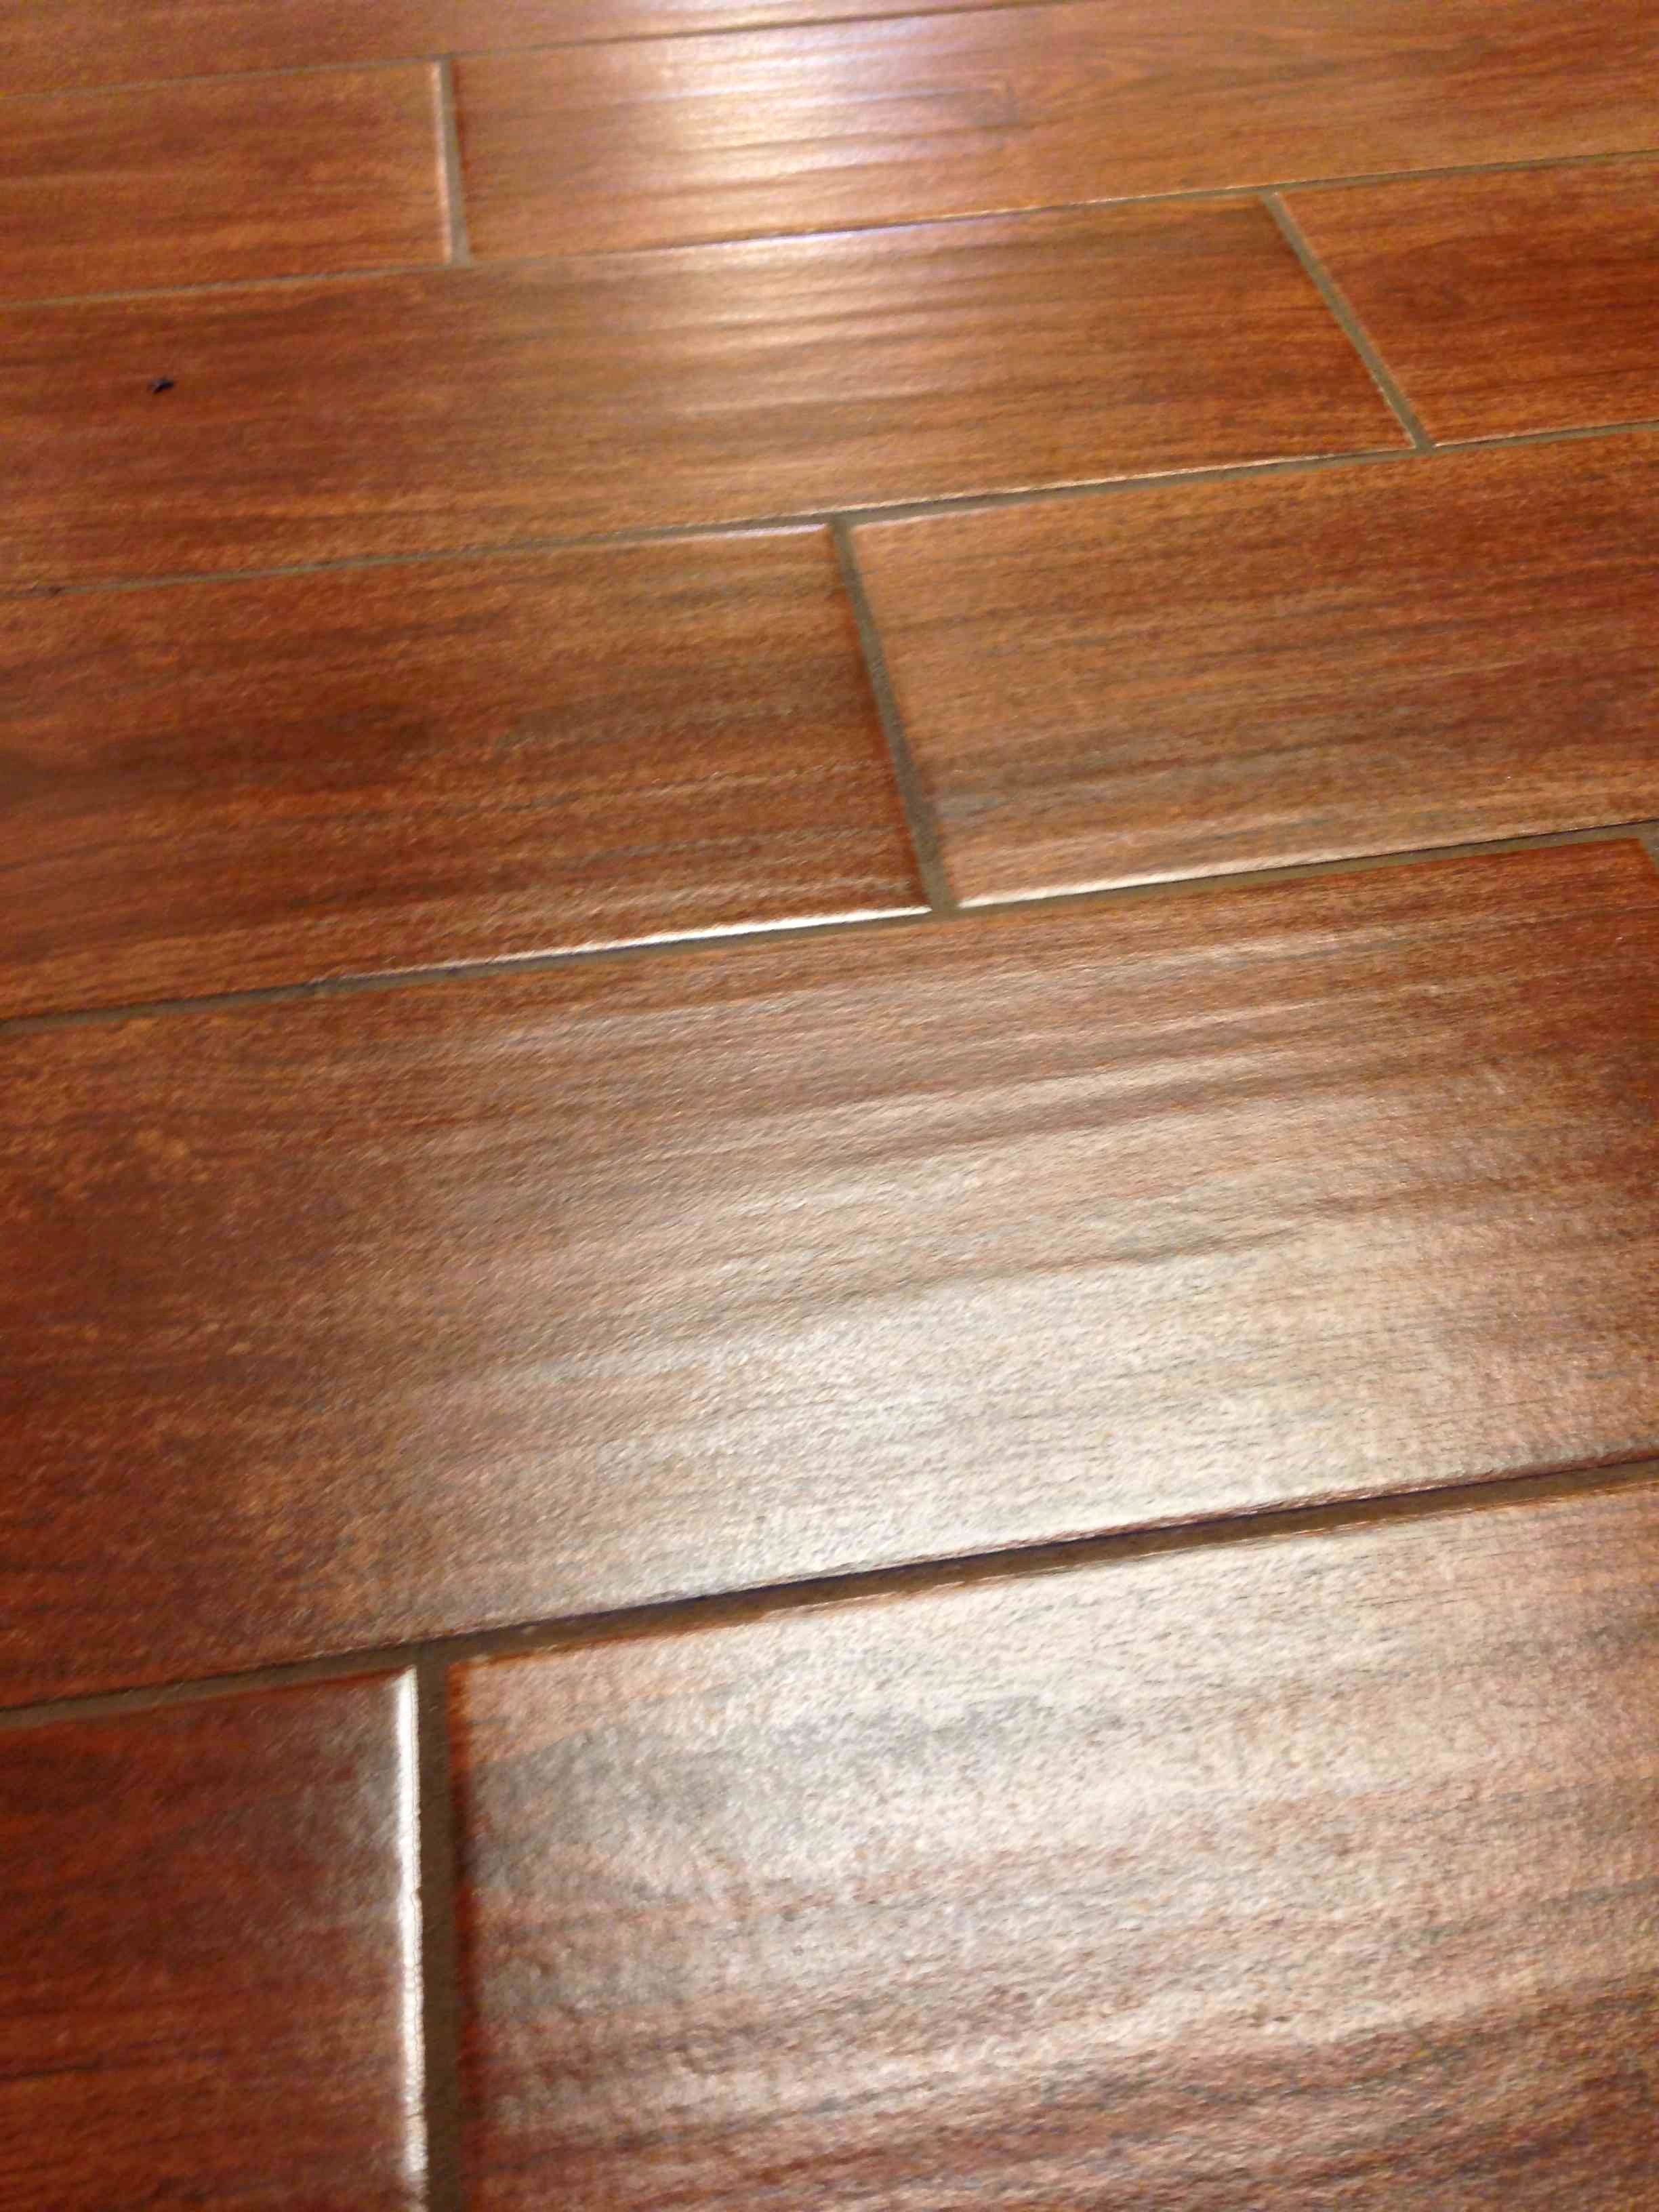 2 1 4 prefinished hardwood flooring of prefinished hardwood salt floor plan ideas in harwood flooring best tile that looks like hardwood floors elegant i pinimg 736x 0d 7b prefinished